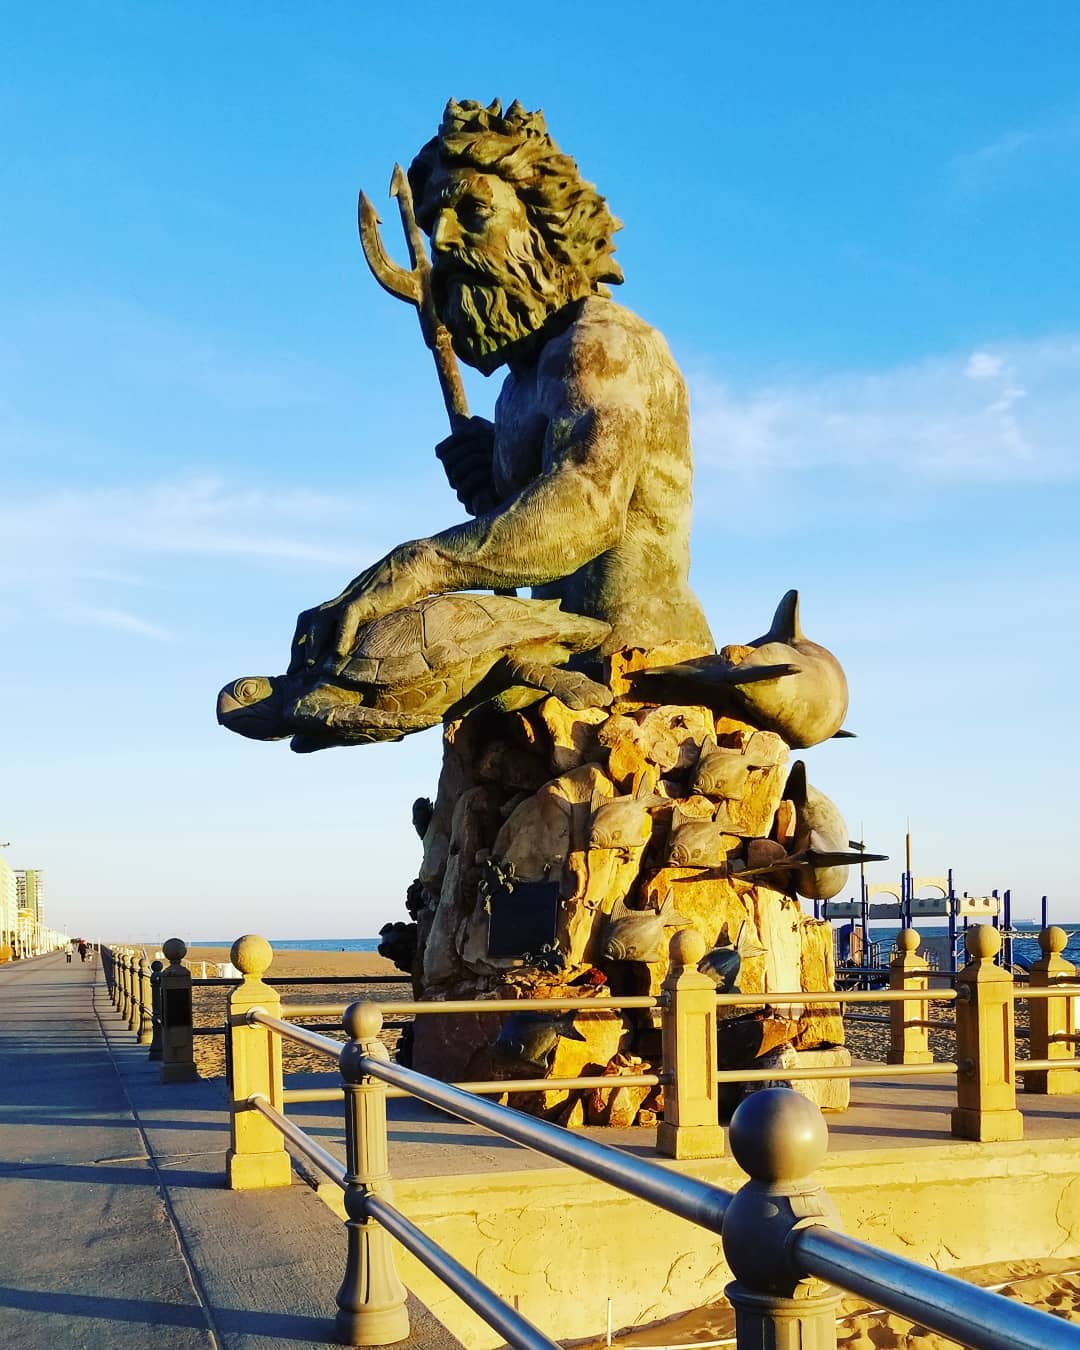 Statue of Neptune on boardwalk. Photo by Instagram user @remid_2015